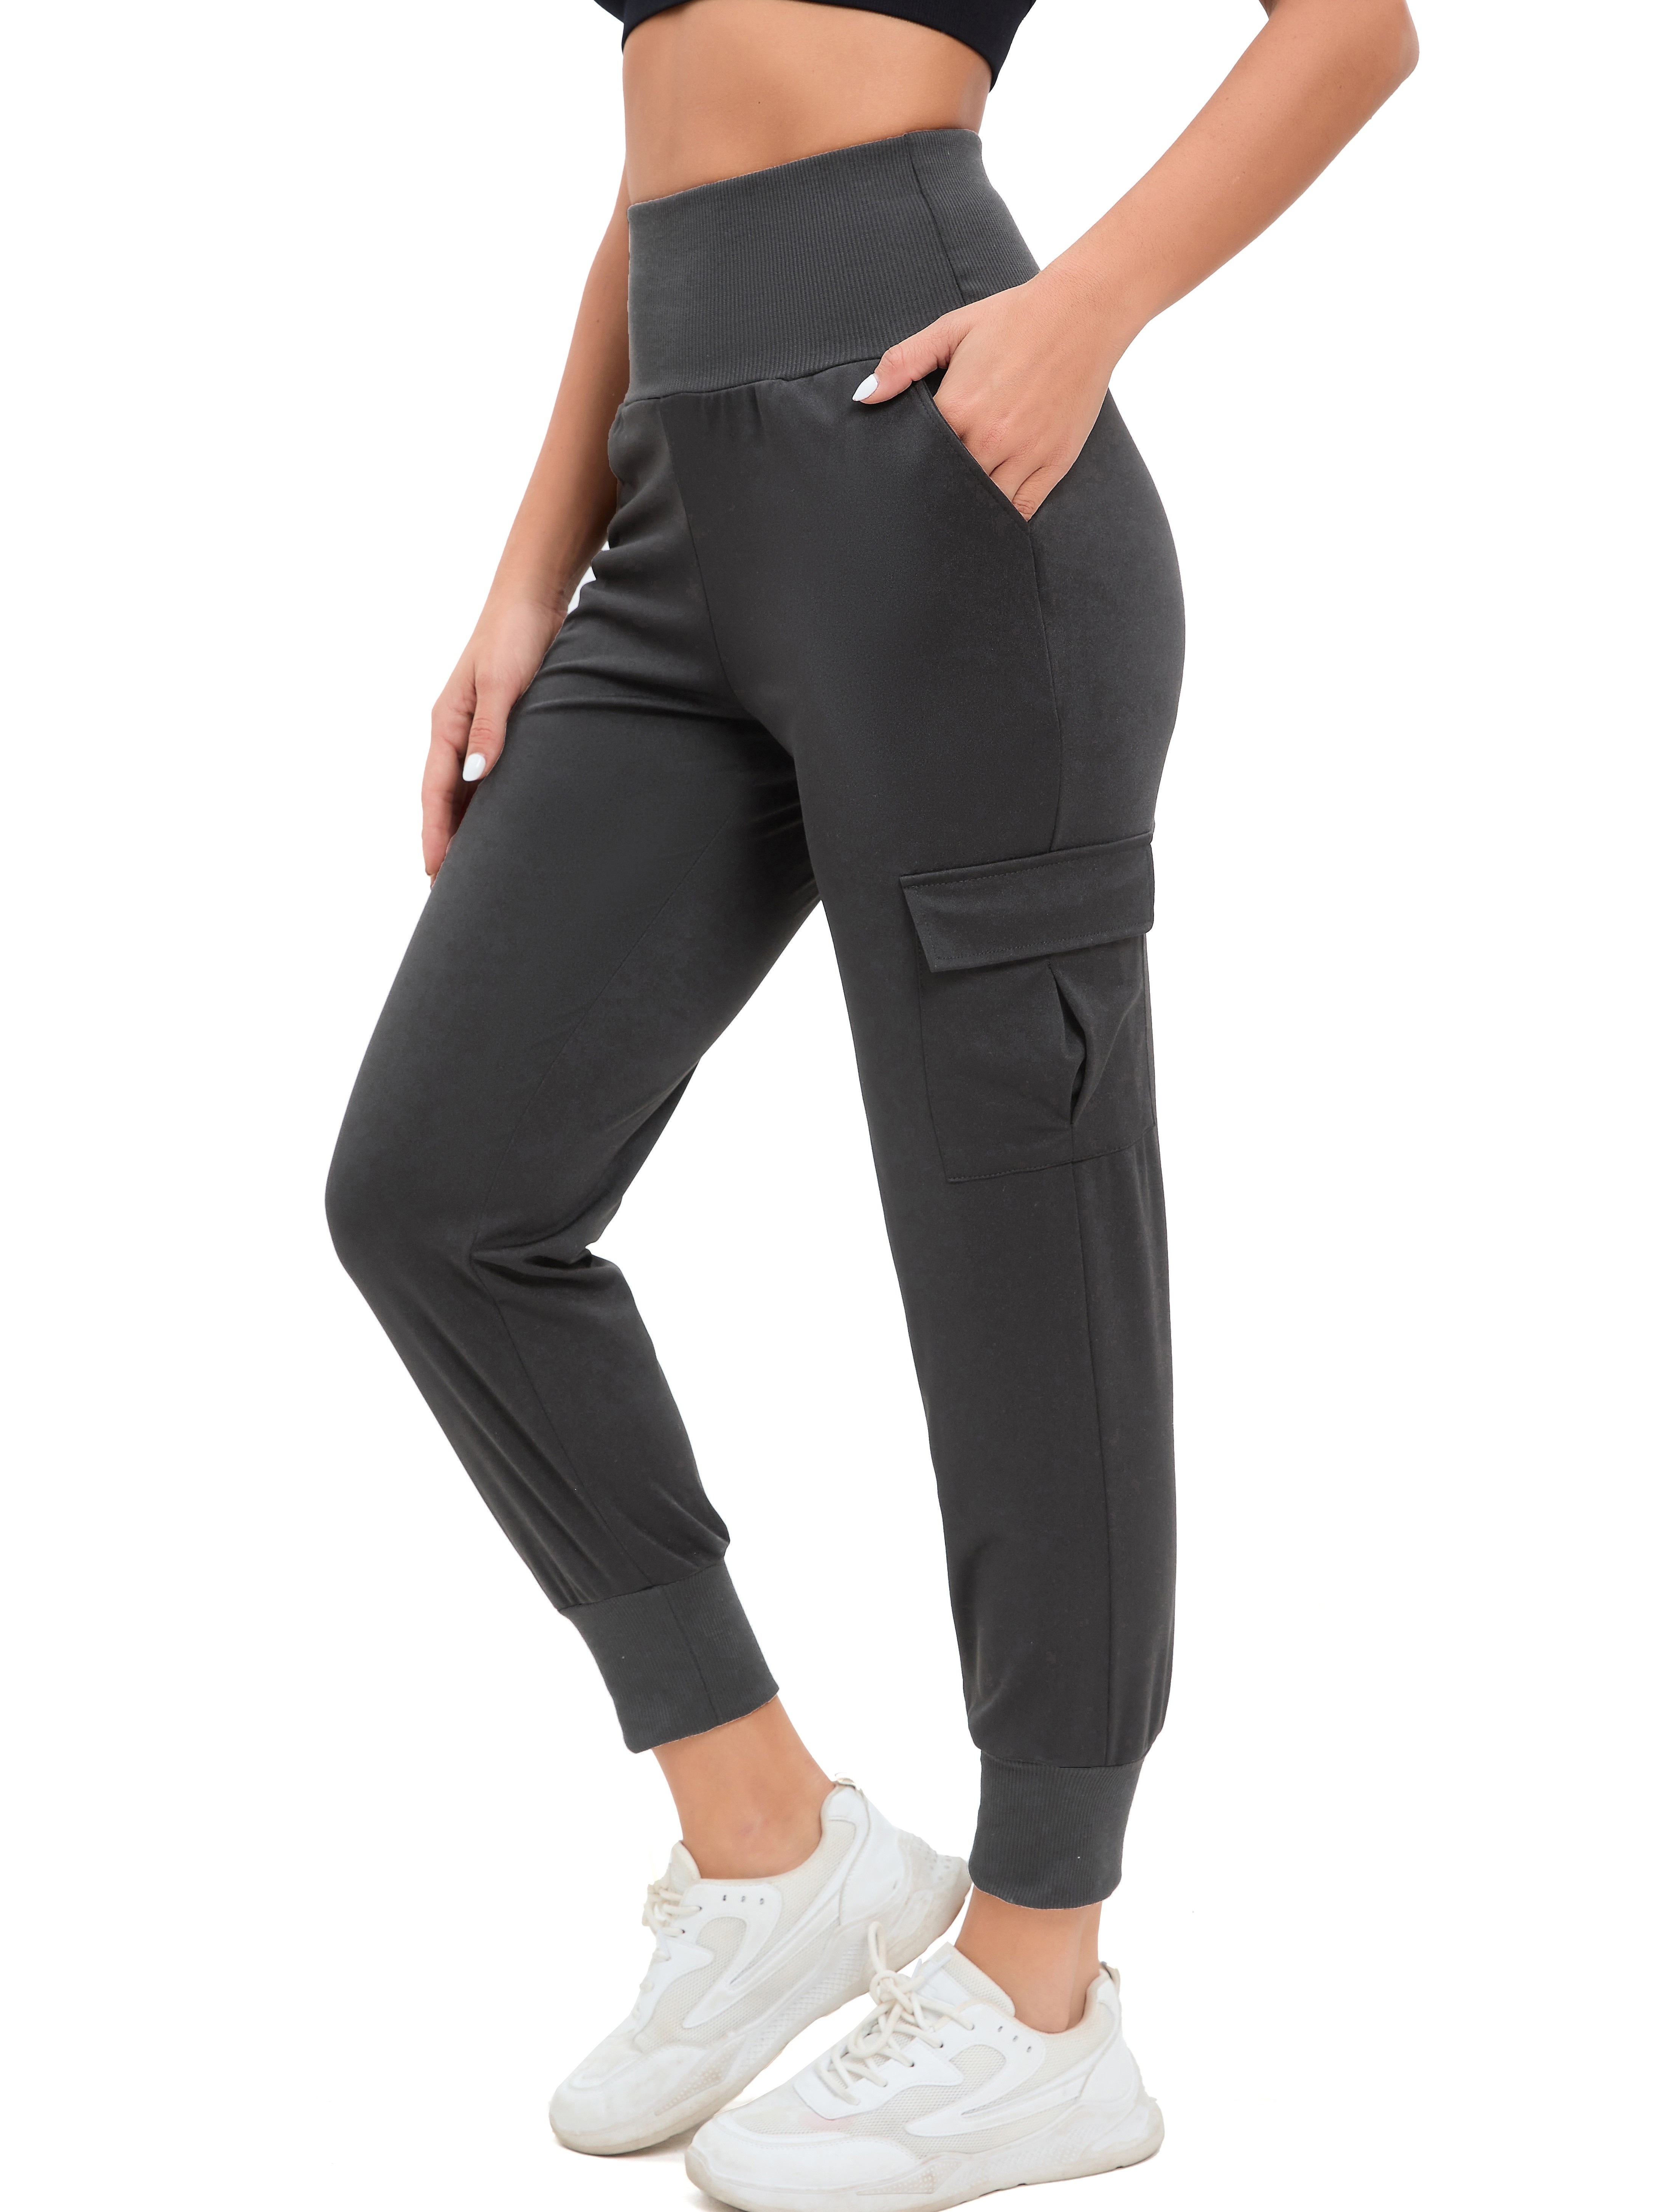 Zella Sweatpants Joggers Black w Pockets XL Womens